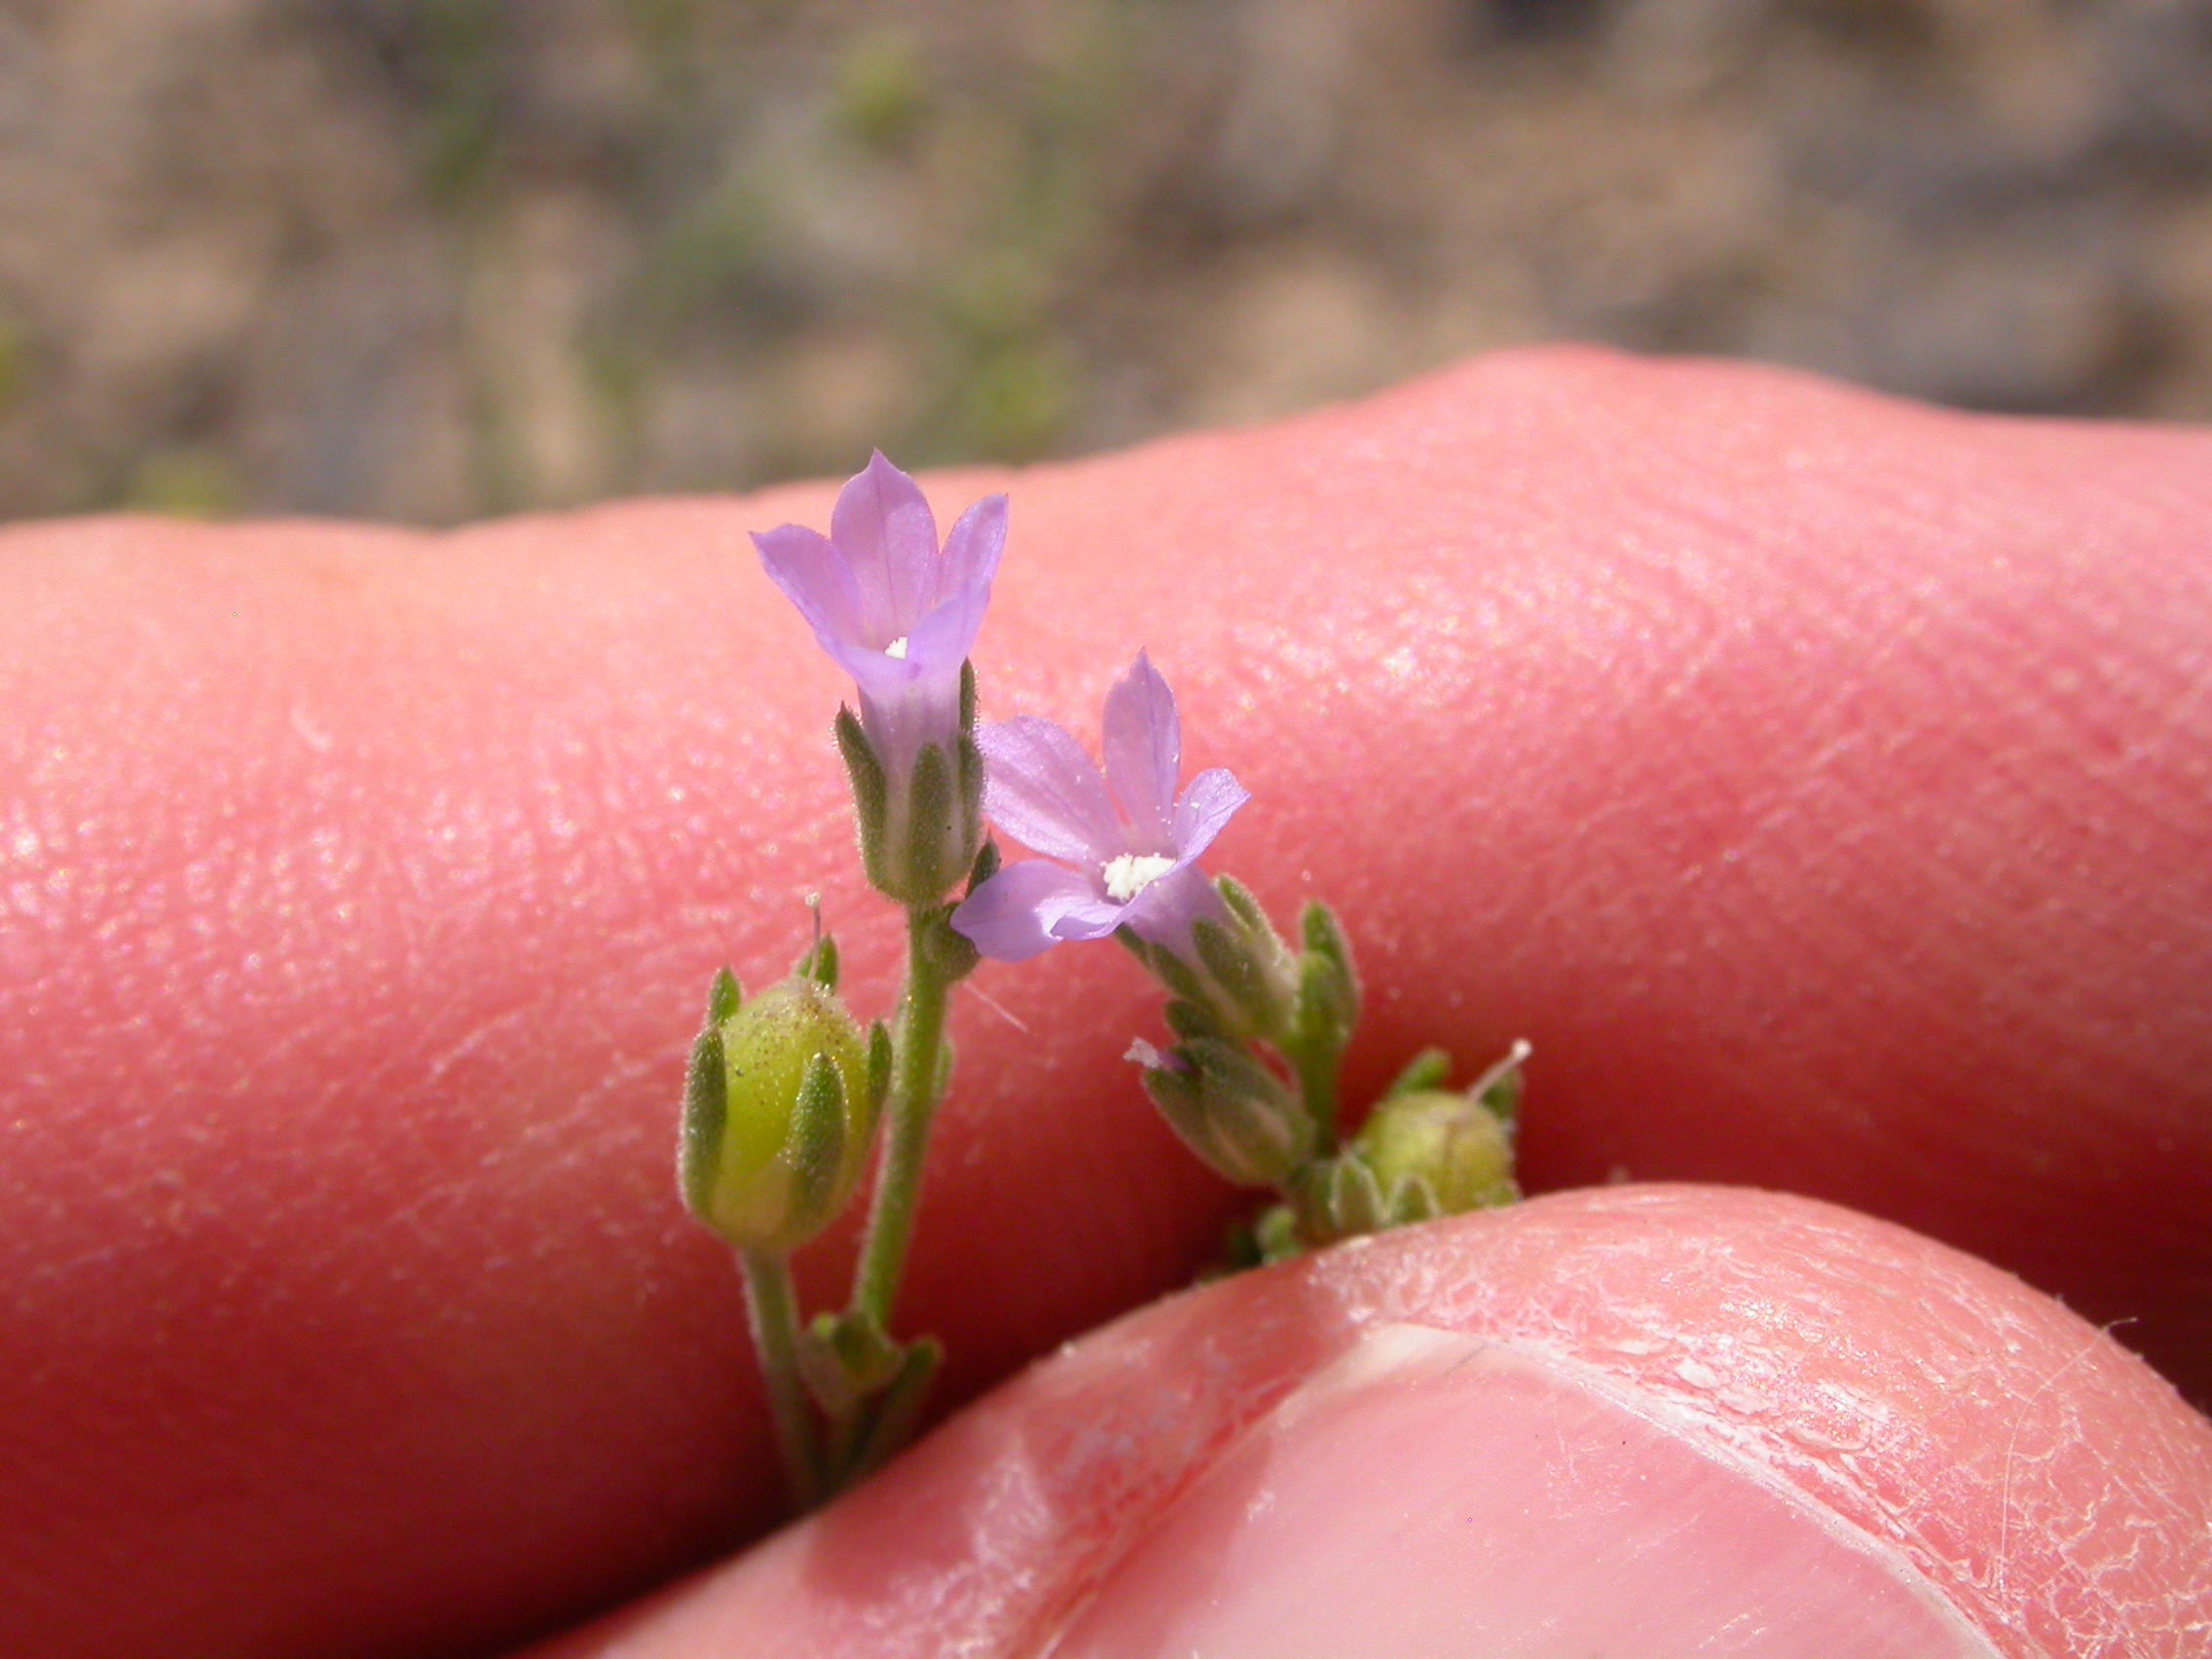 Tiny lavender flowers of Gilia inconspicua